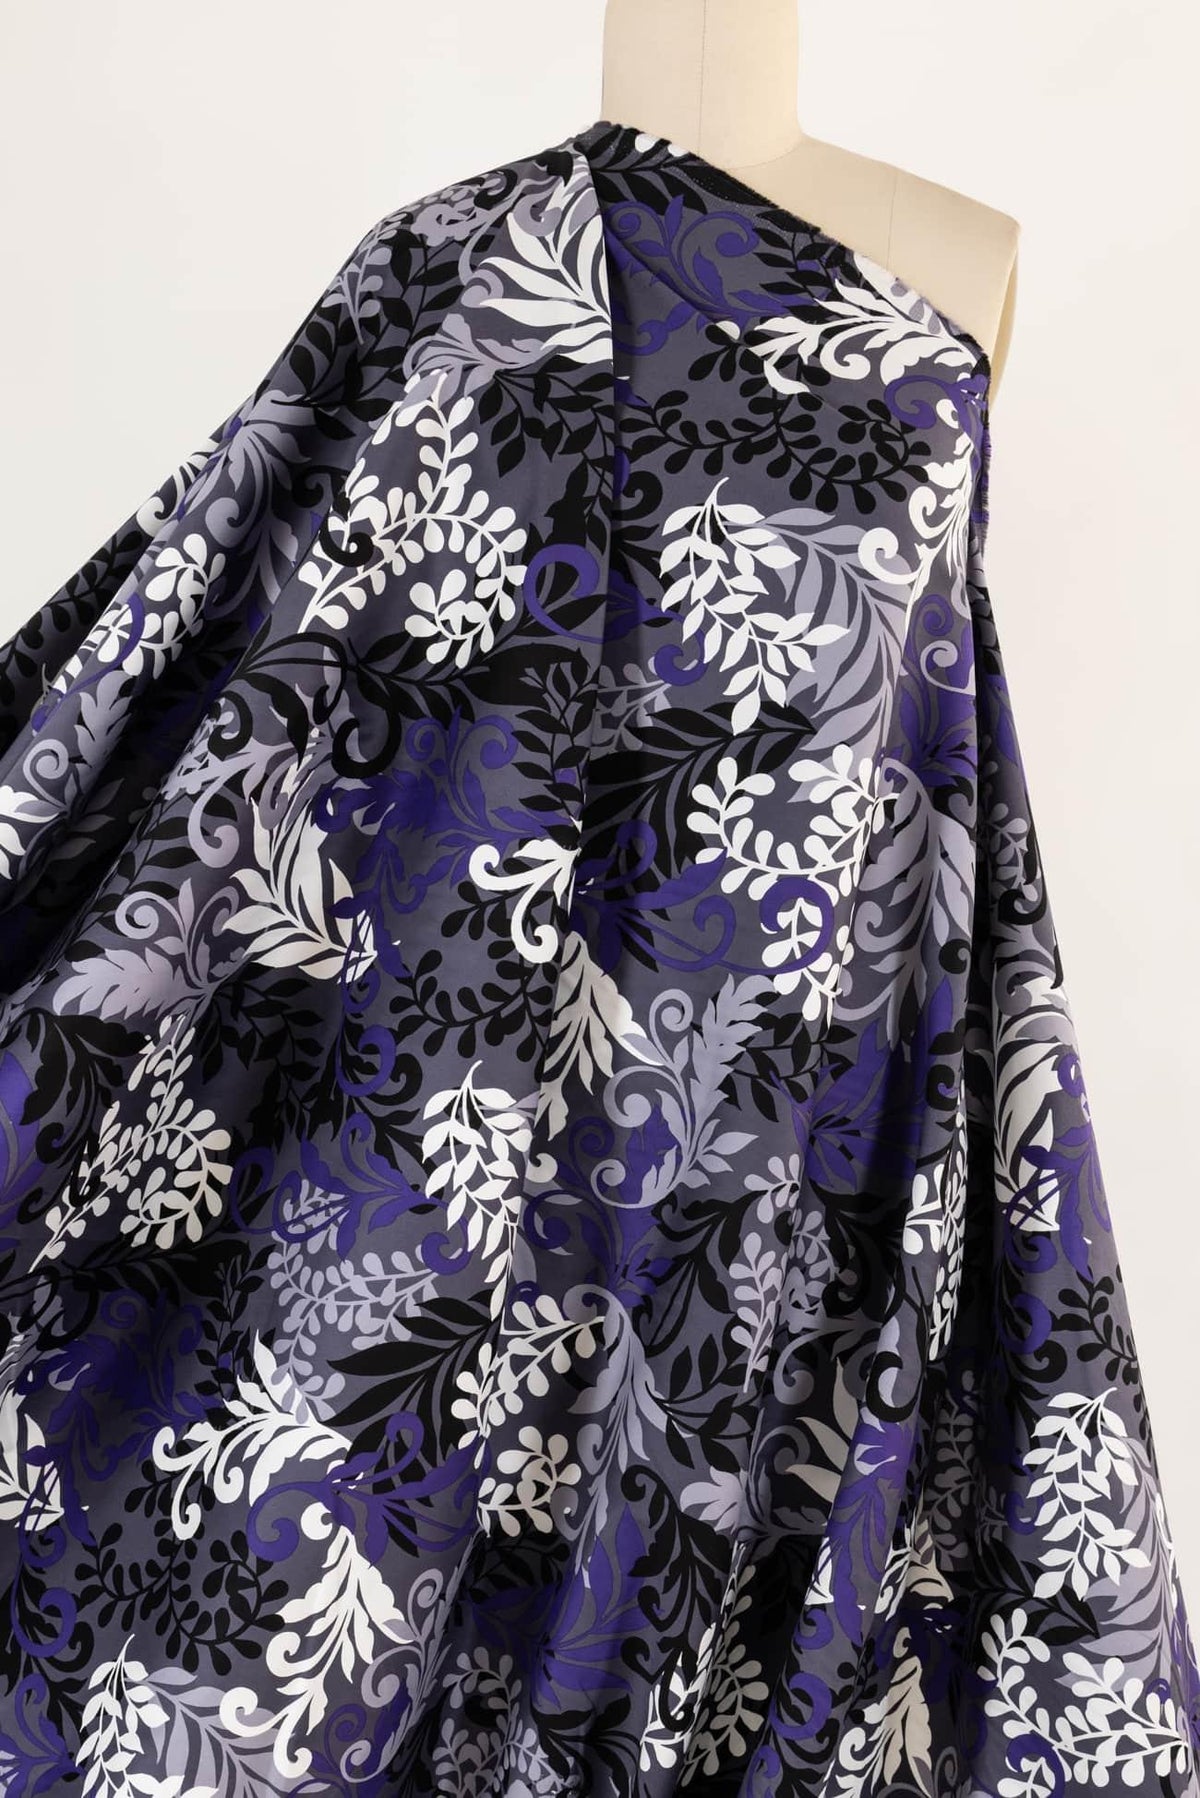 Purple Wisteria Stretch Cotton Woven - Marcy Tilton Fabrics